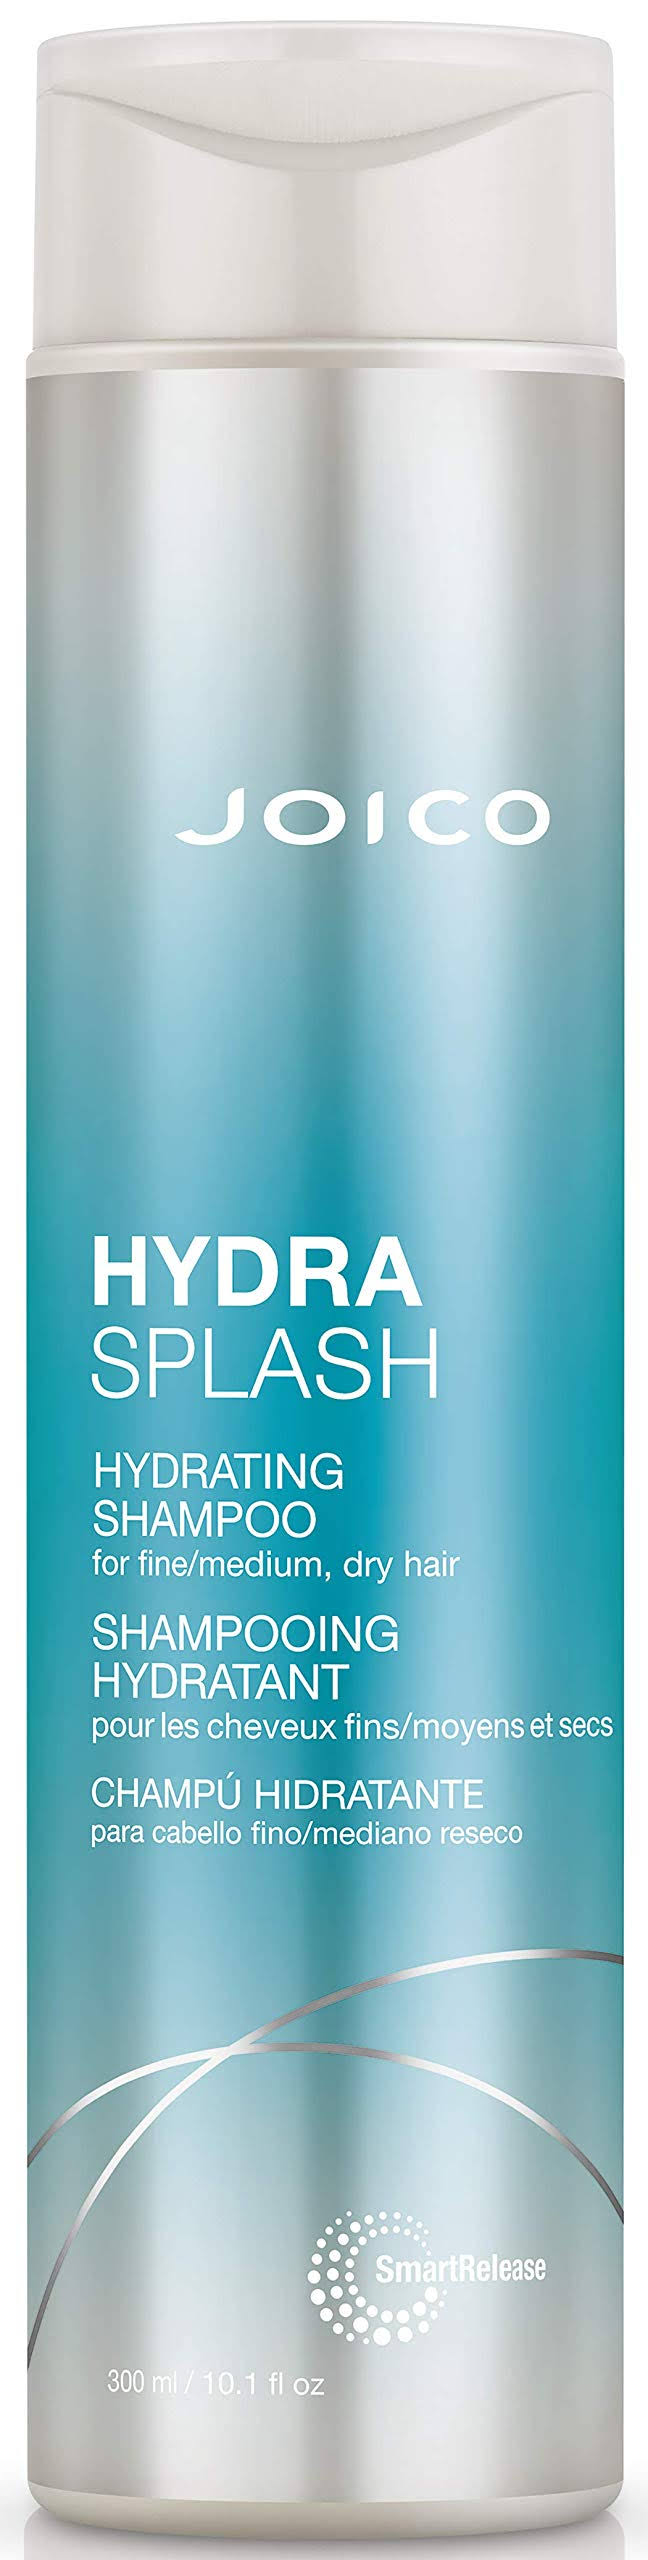 JOICO Hydrasplash Hydrating Shampoo 300ml